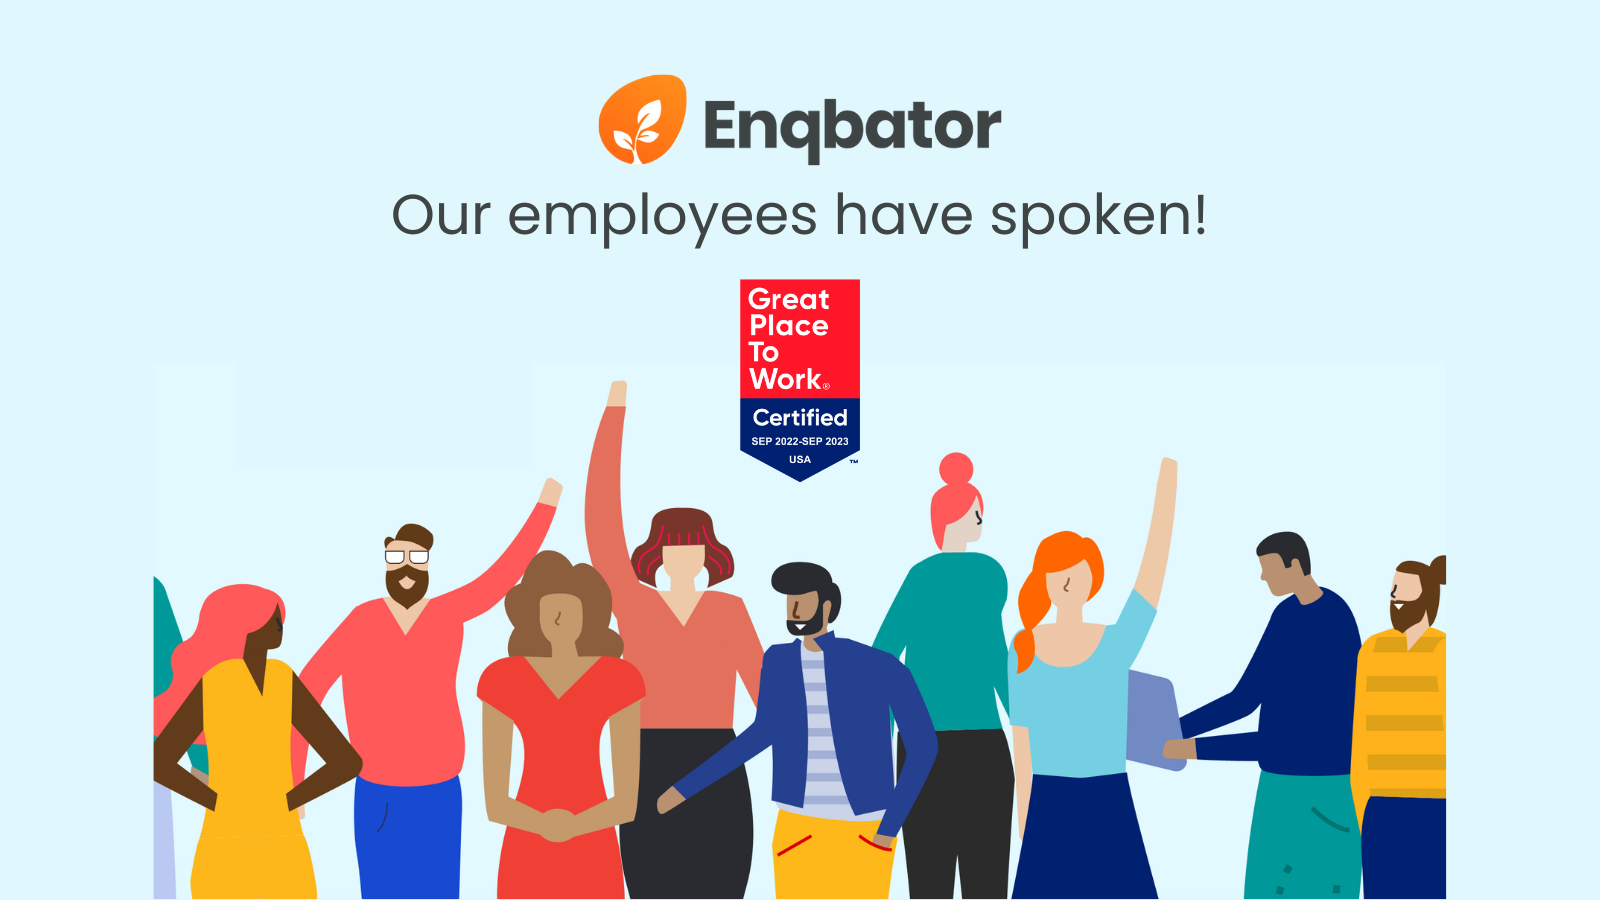 enqbator great place to work certification